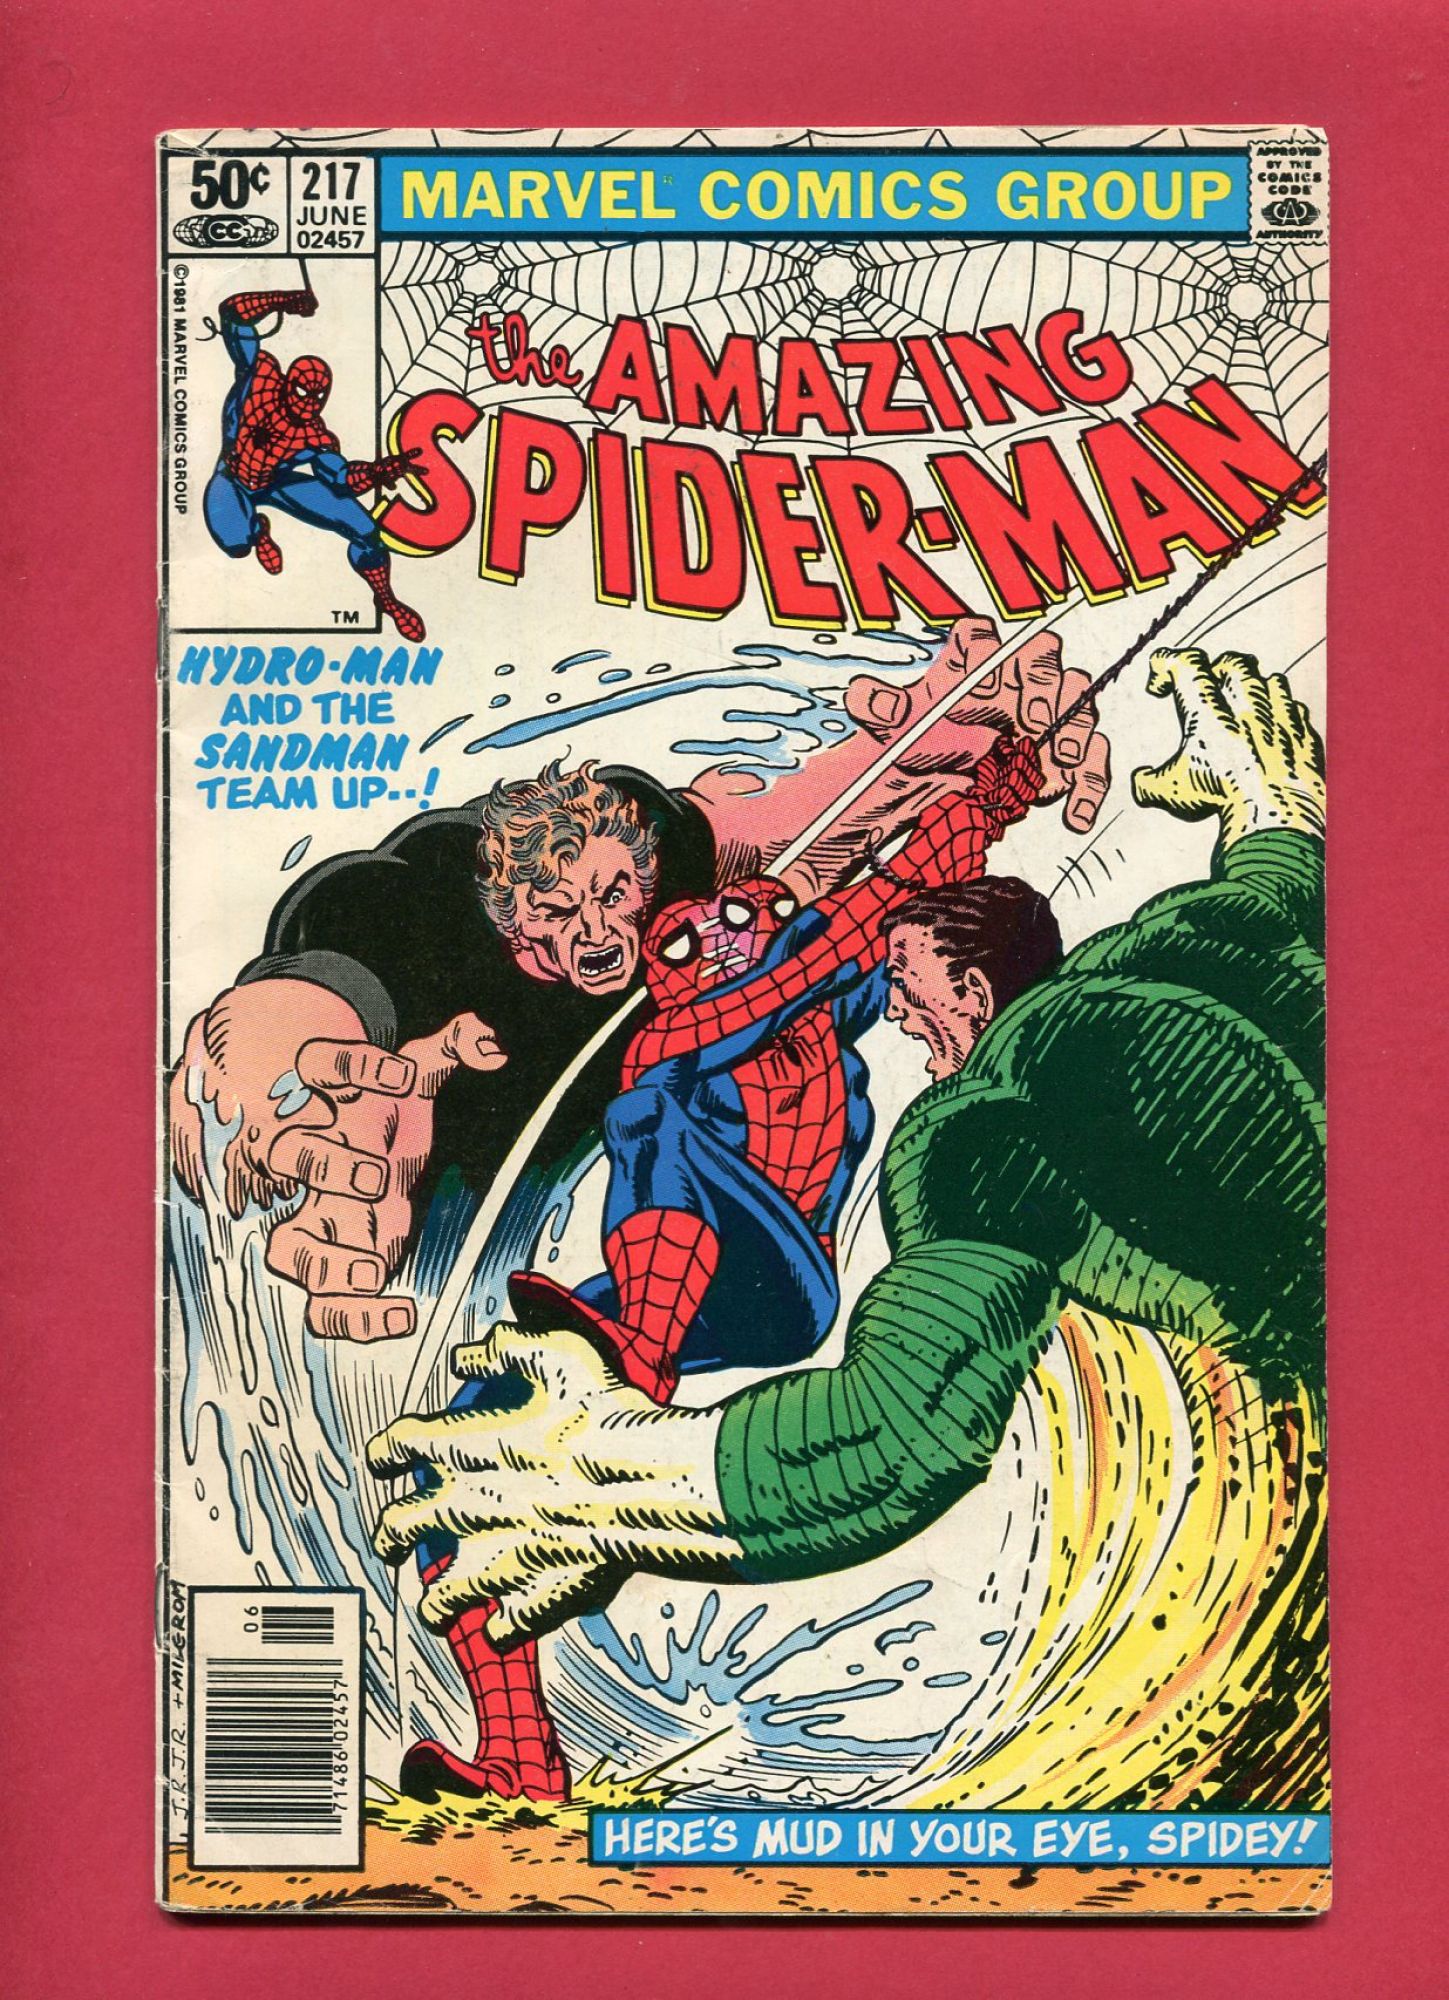 Amazing Spider-Man #217, Jun 1981, 6.0 FN